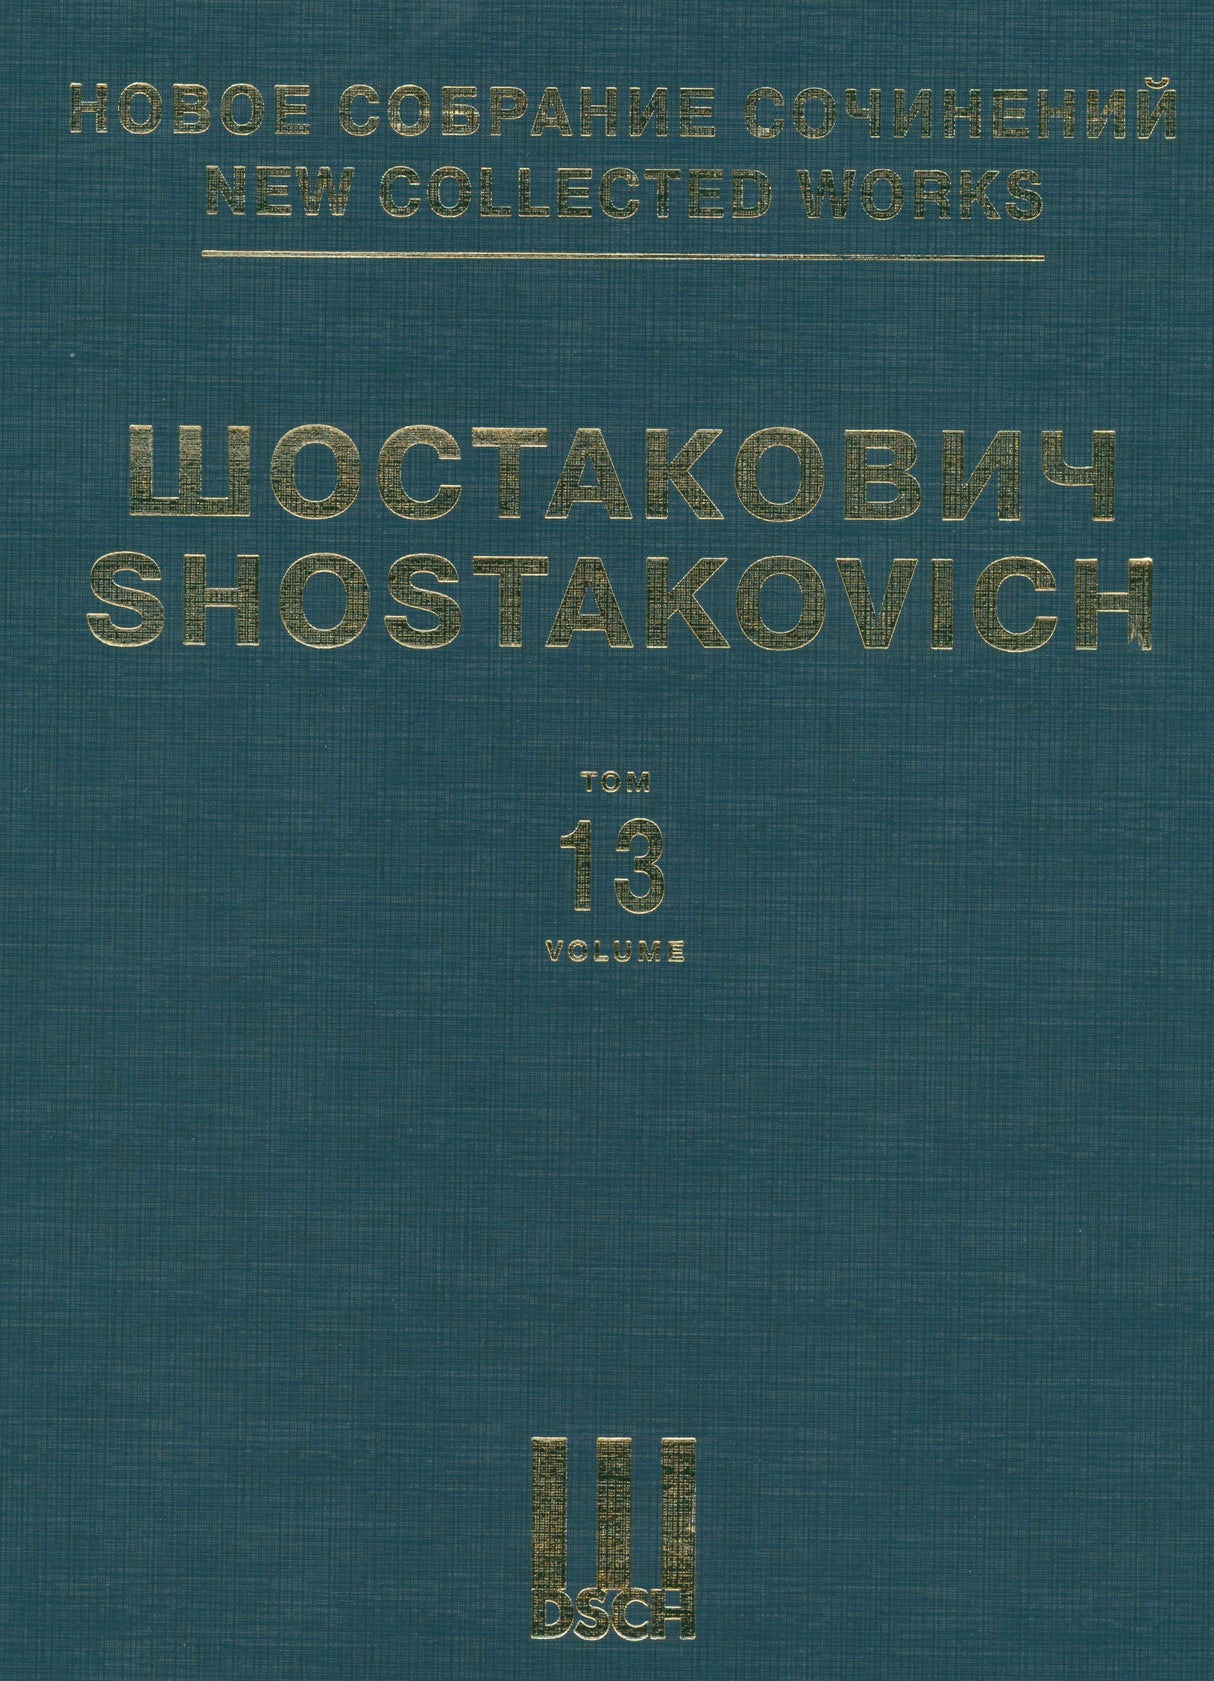 Shostakovich: Symphony No. 13, Op. 113